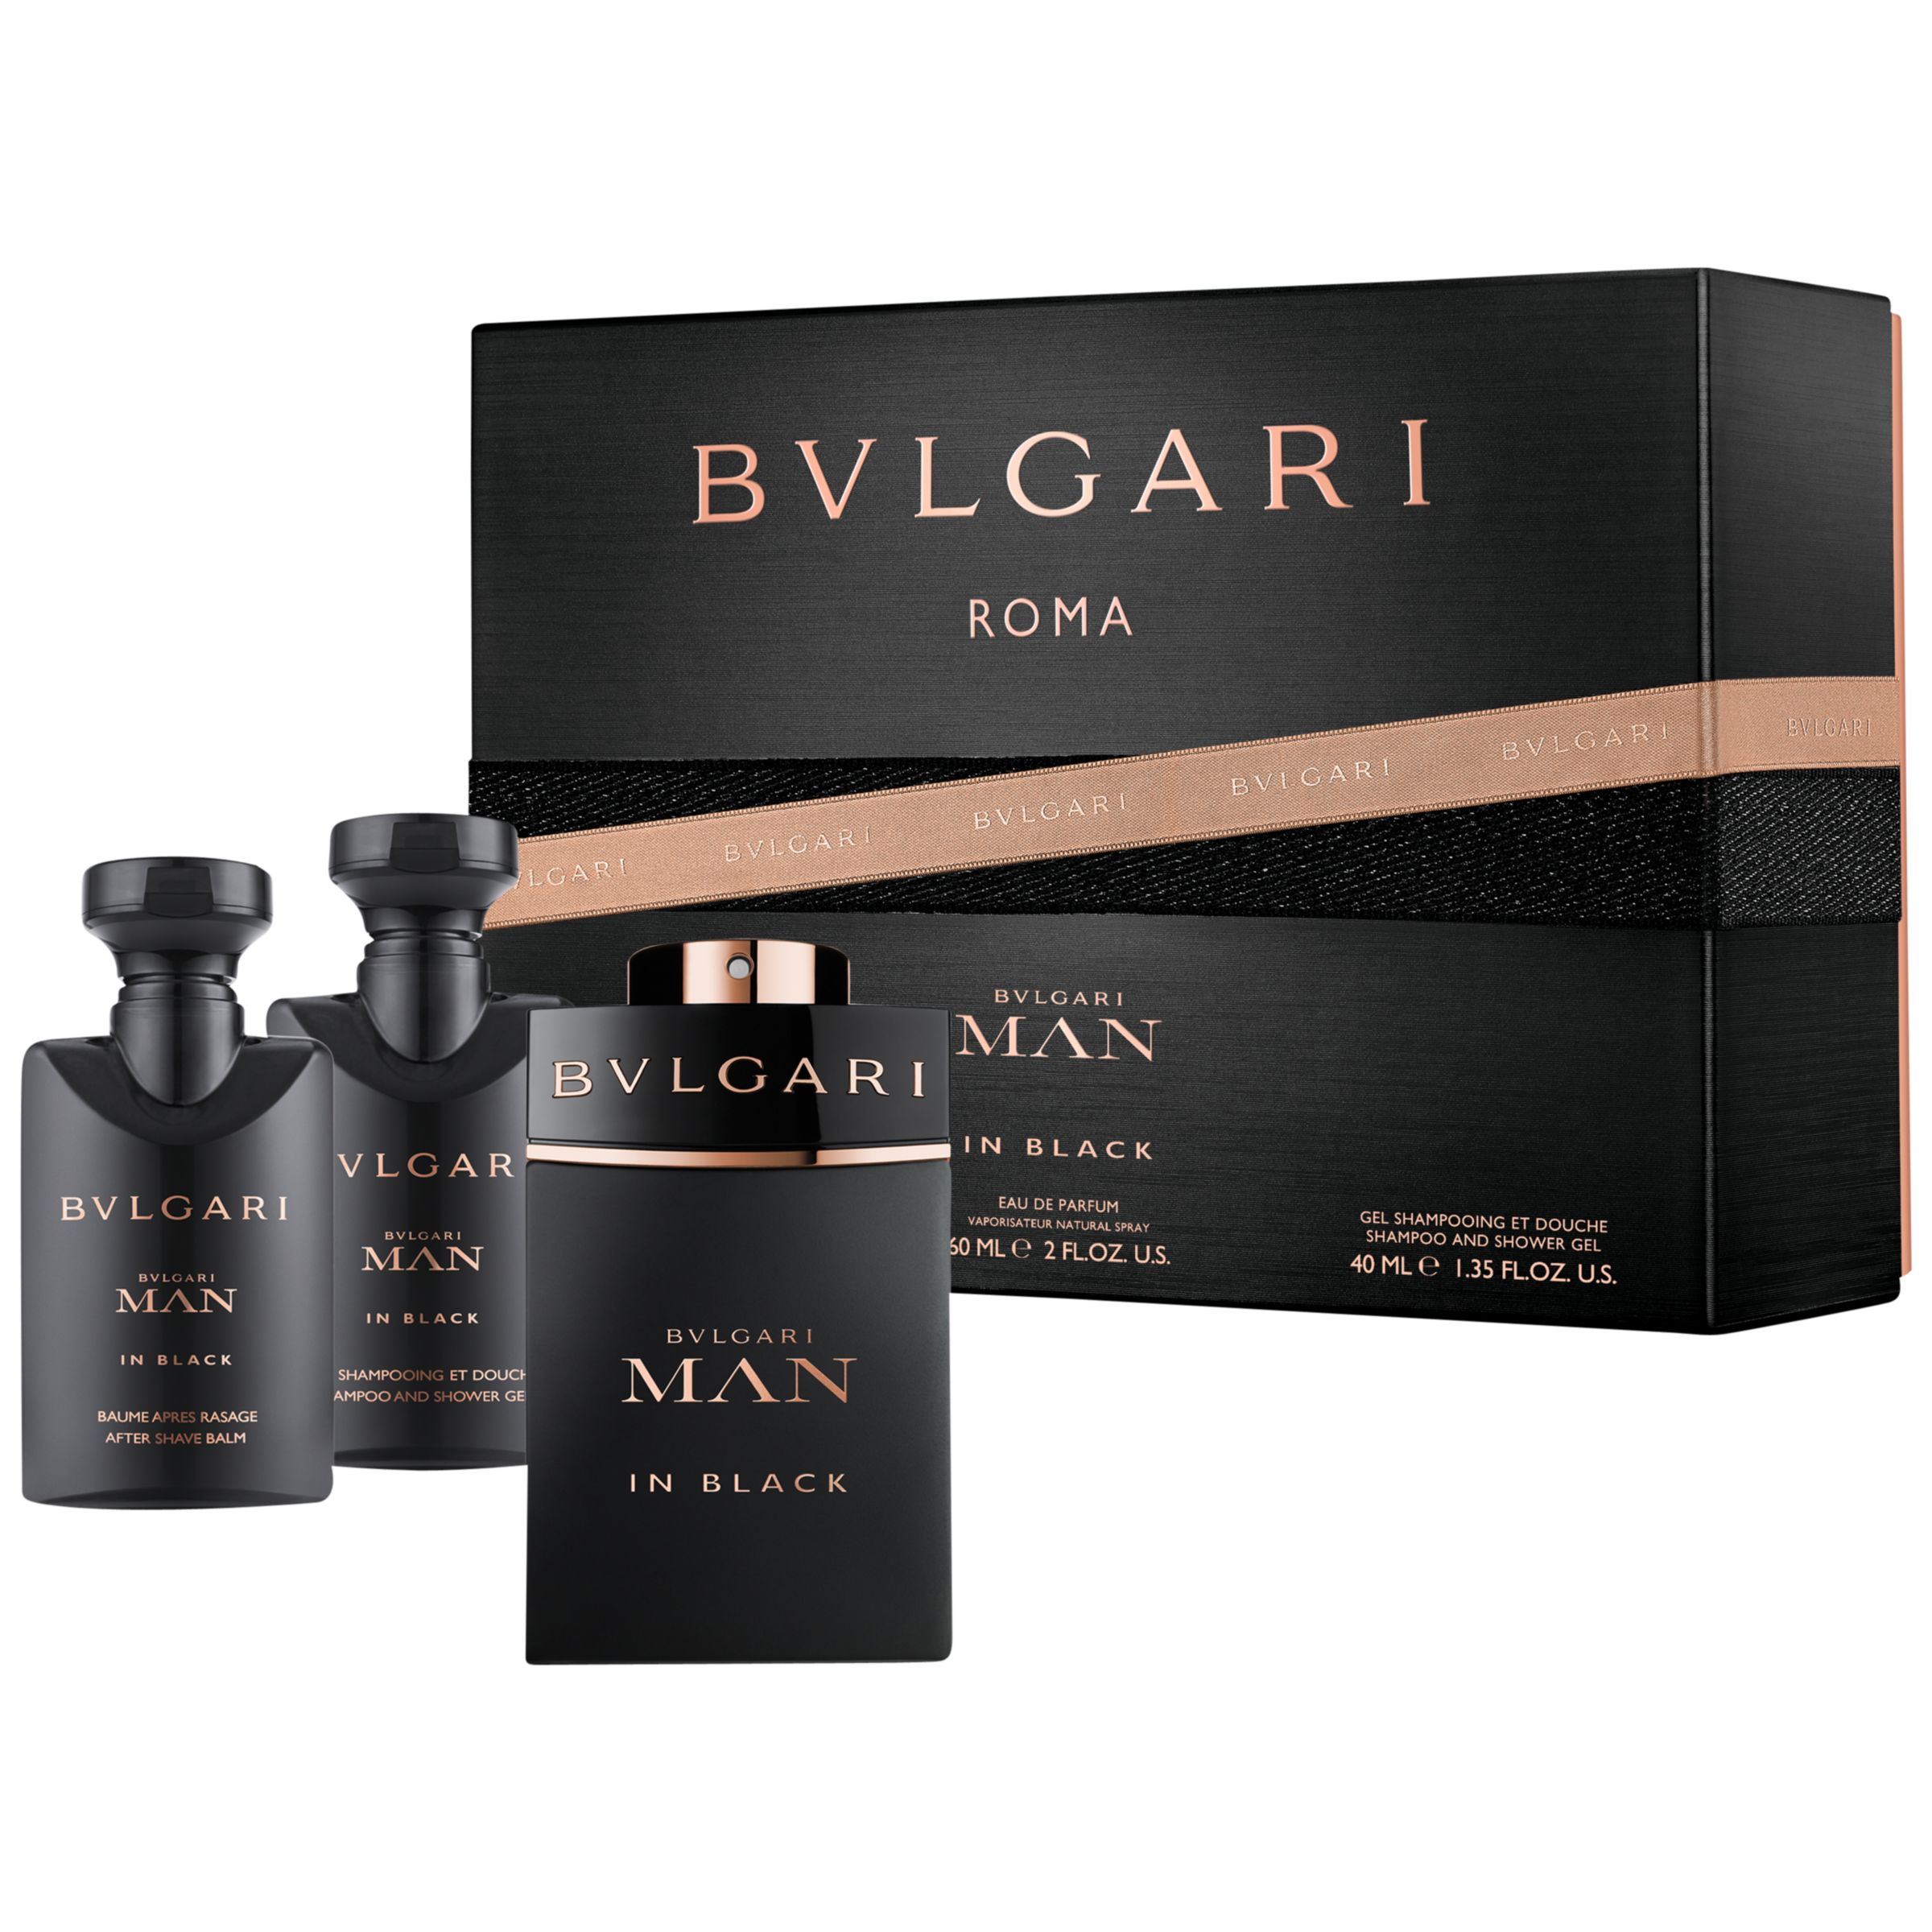 Bvlgari Man In Black 60ml Eau de Parfum 